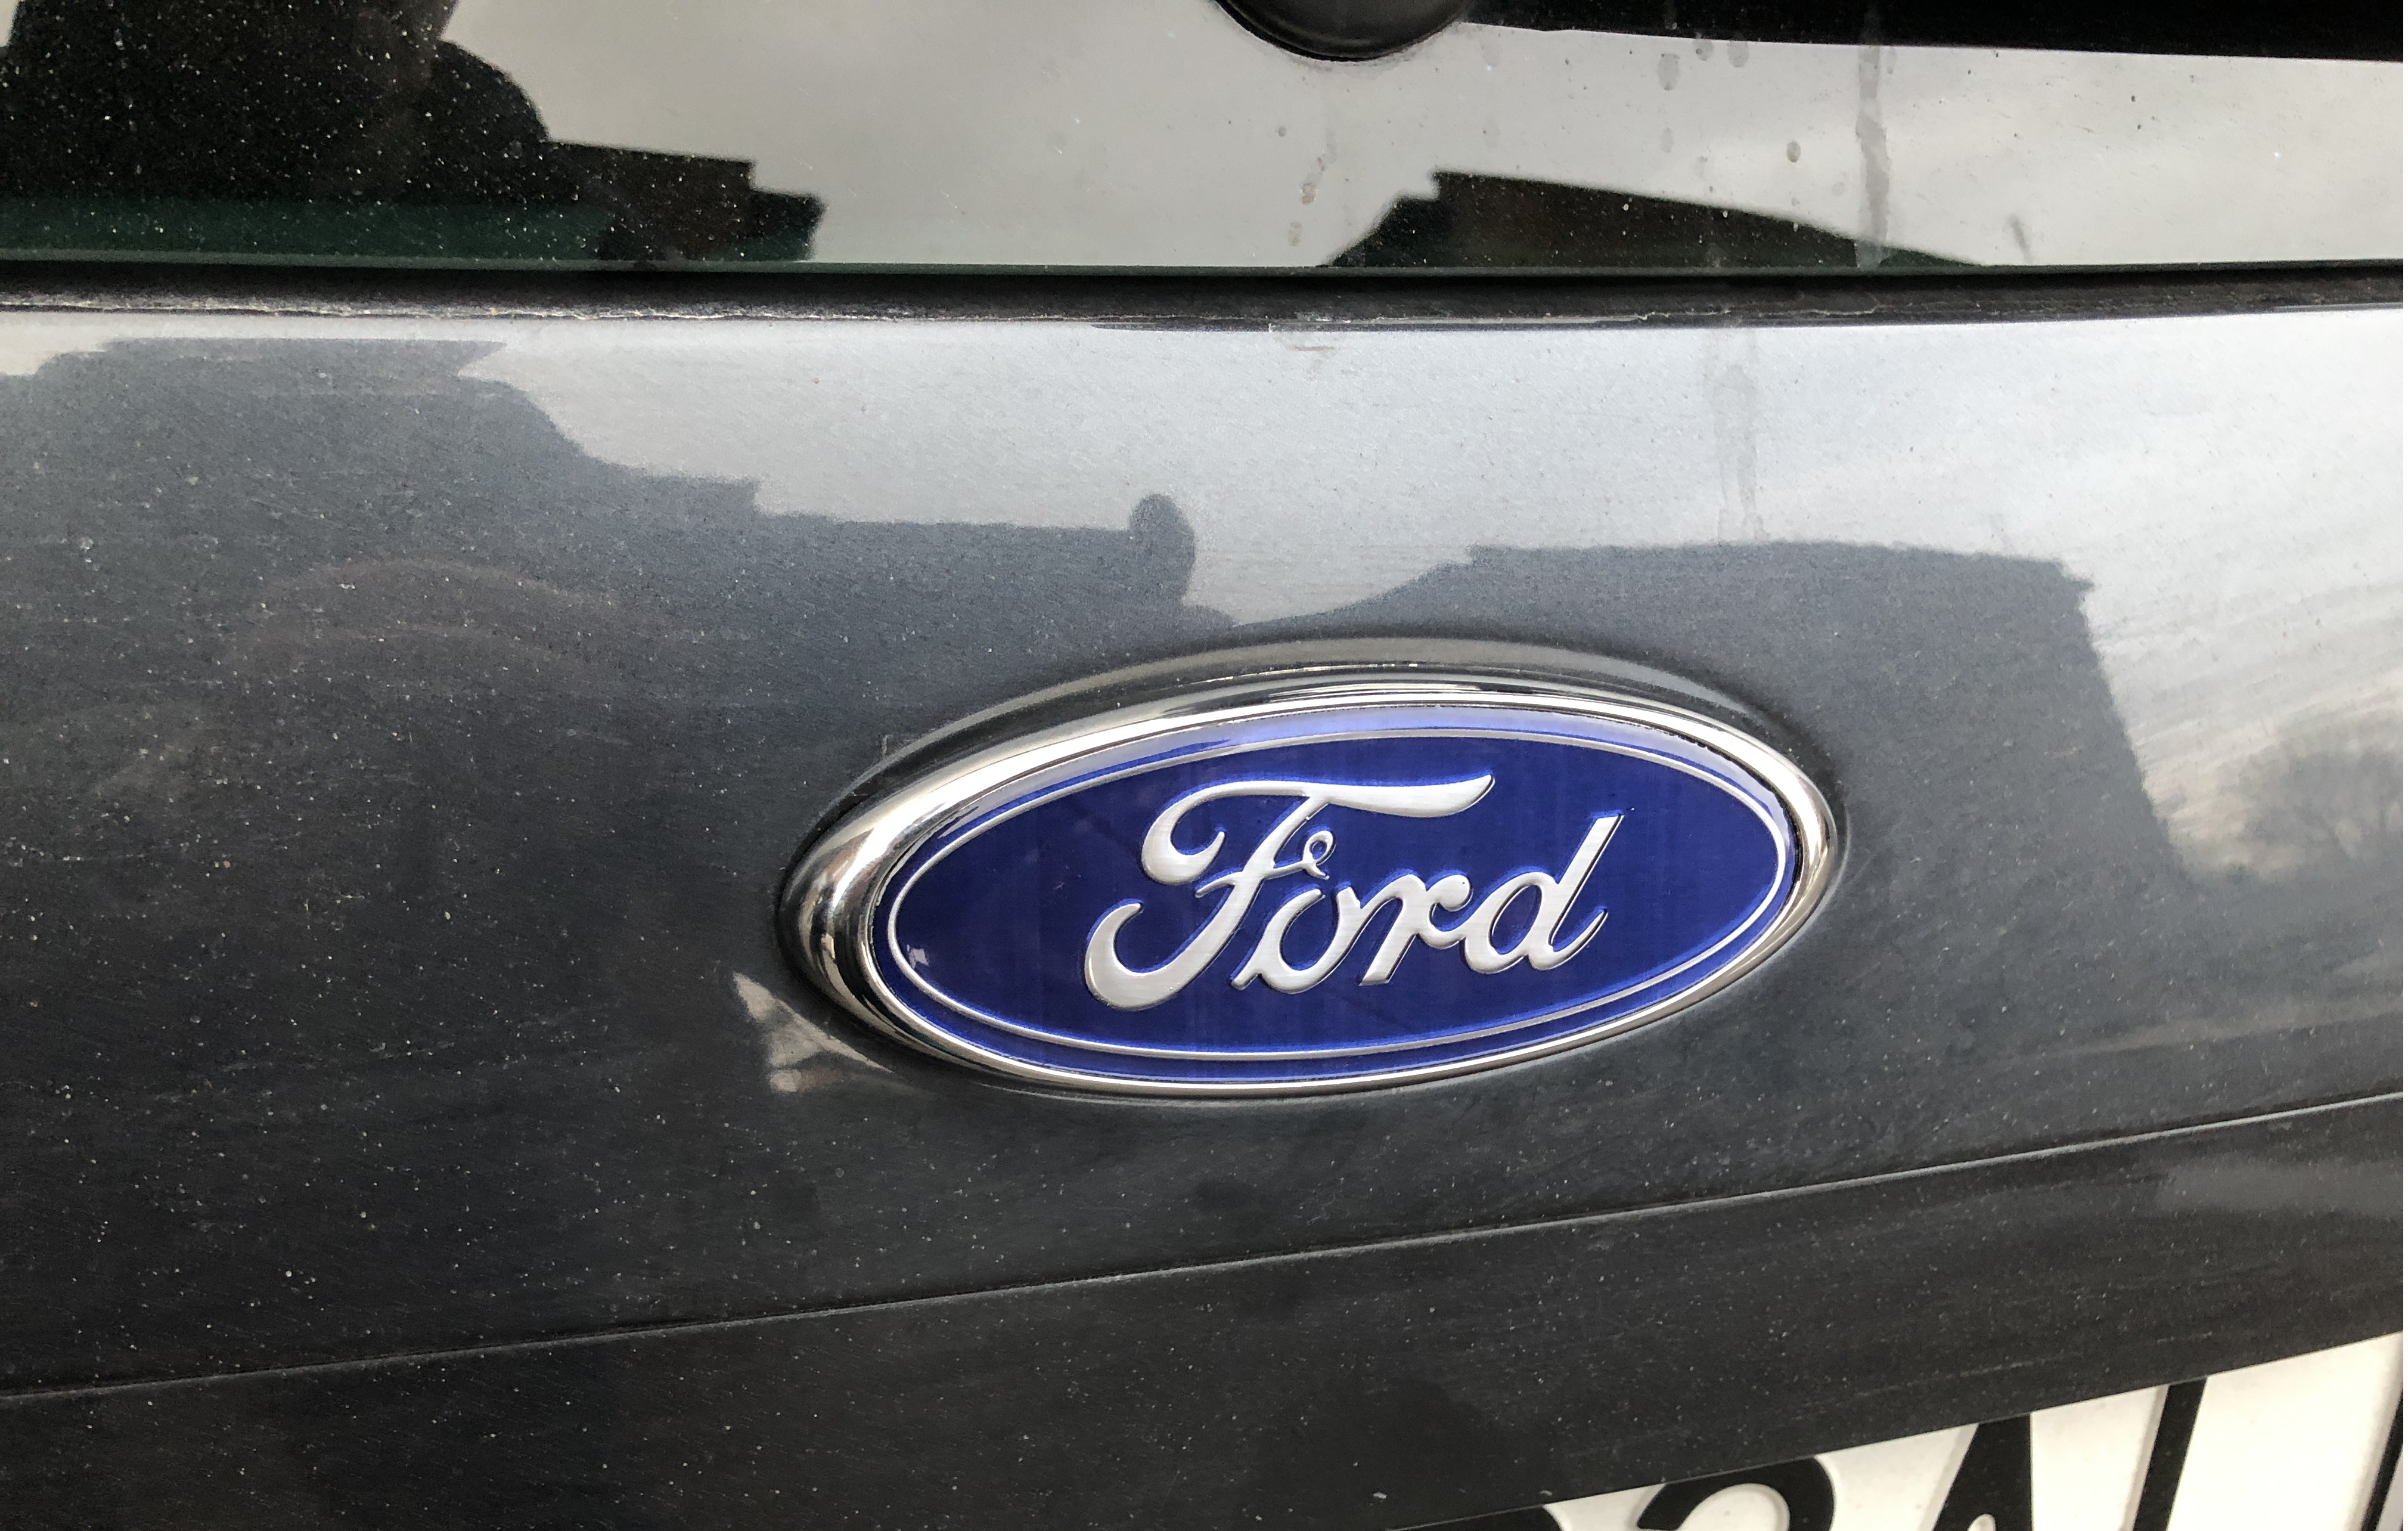 Emblemat znaczek Ford 147mm x 57mm chromowany mocowany na